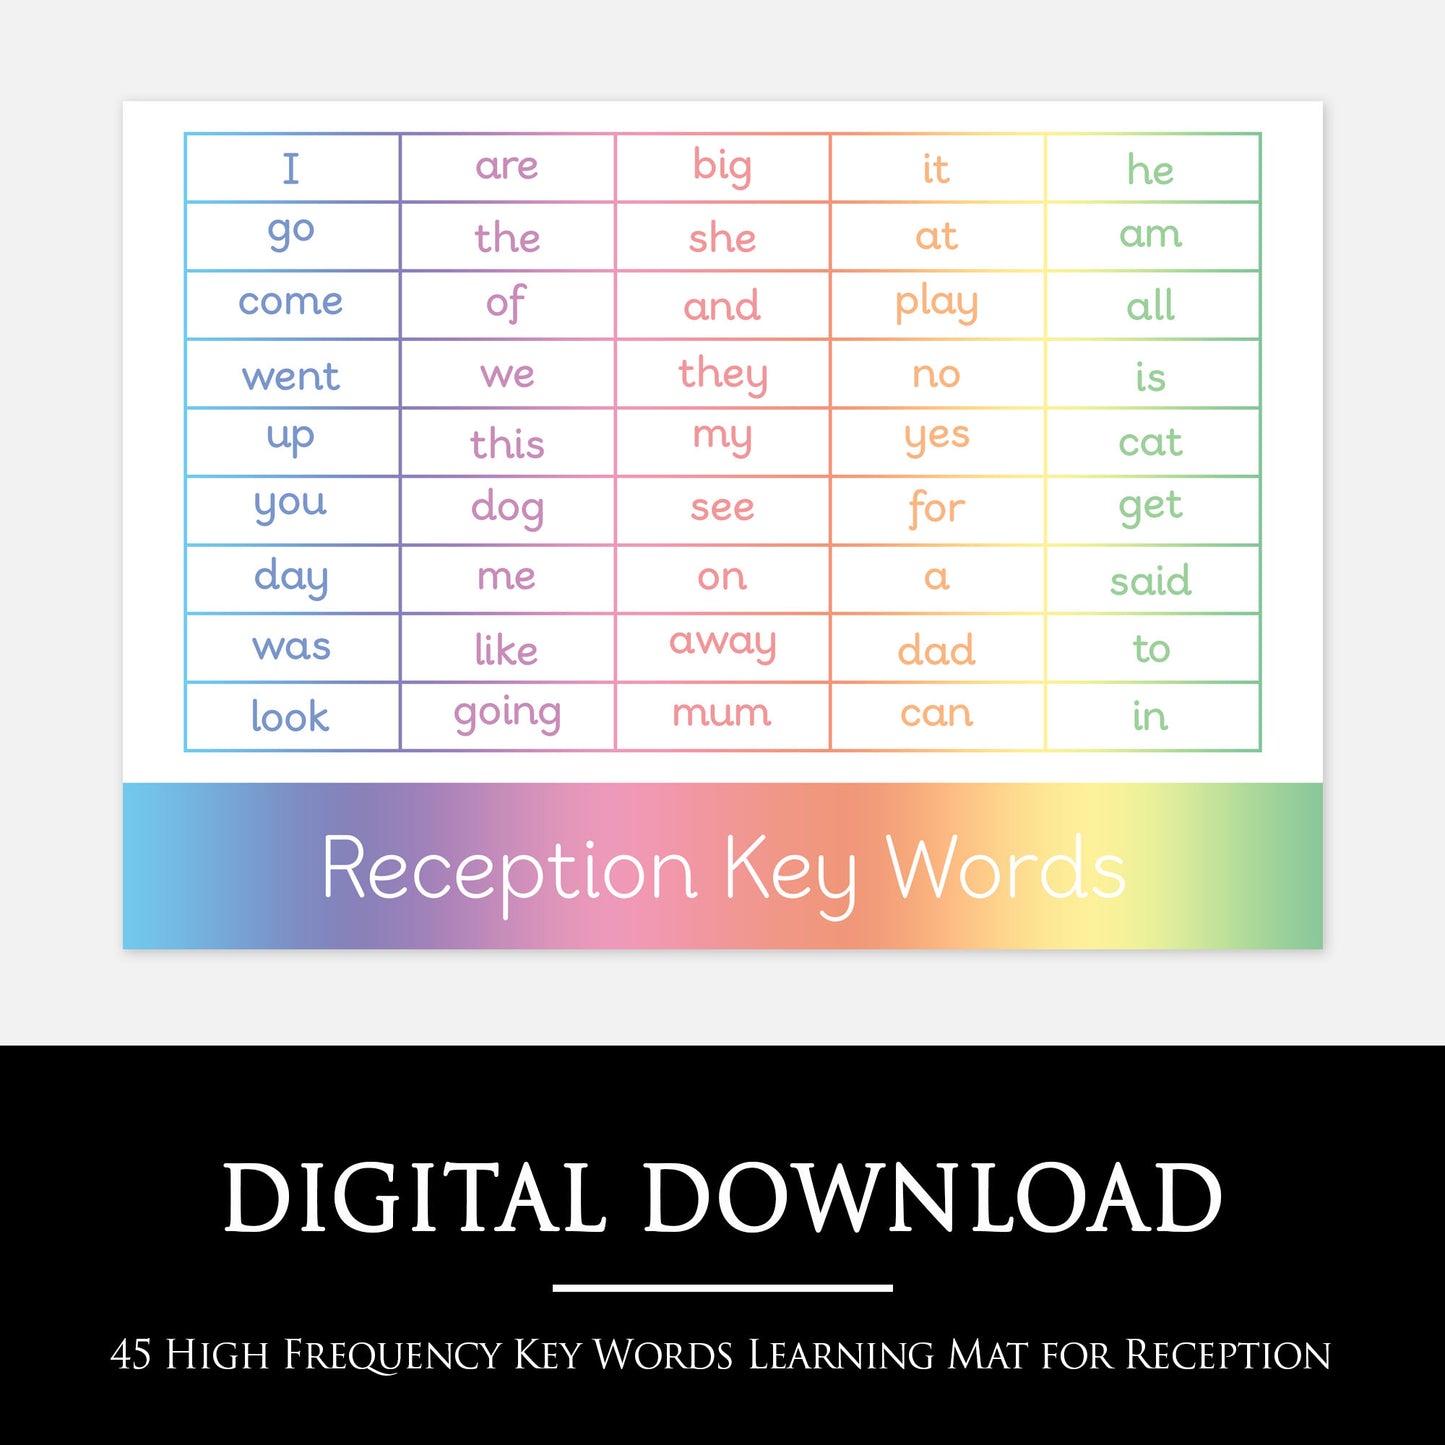 Reception Key Words Learning Mat | Digital Download